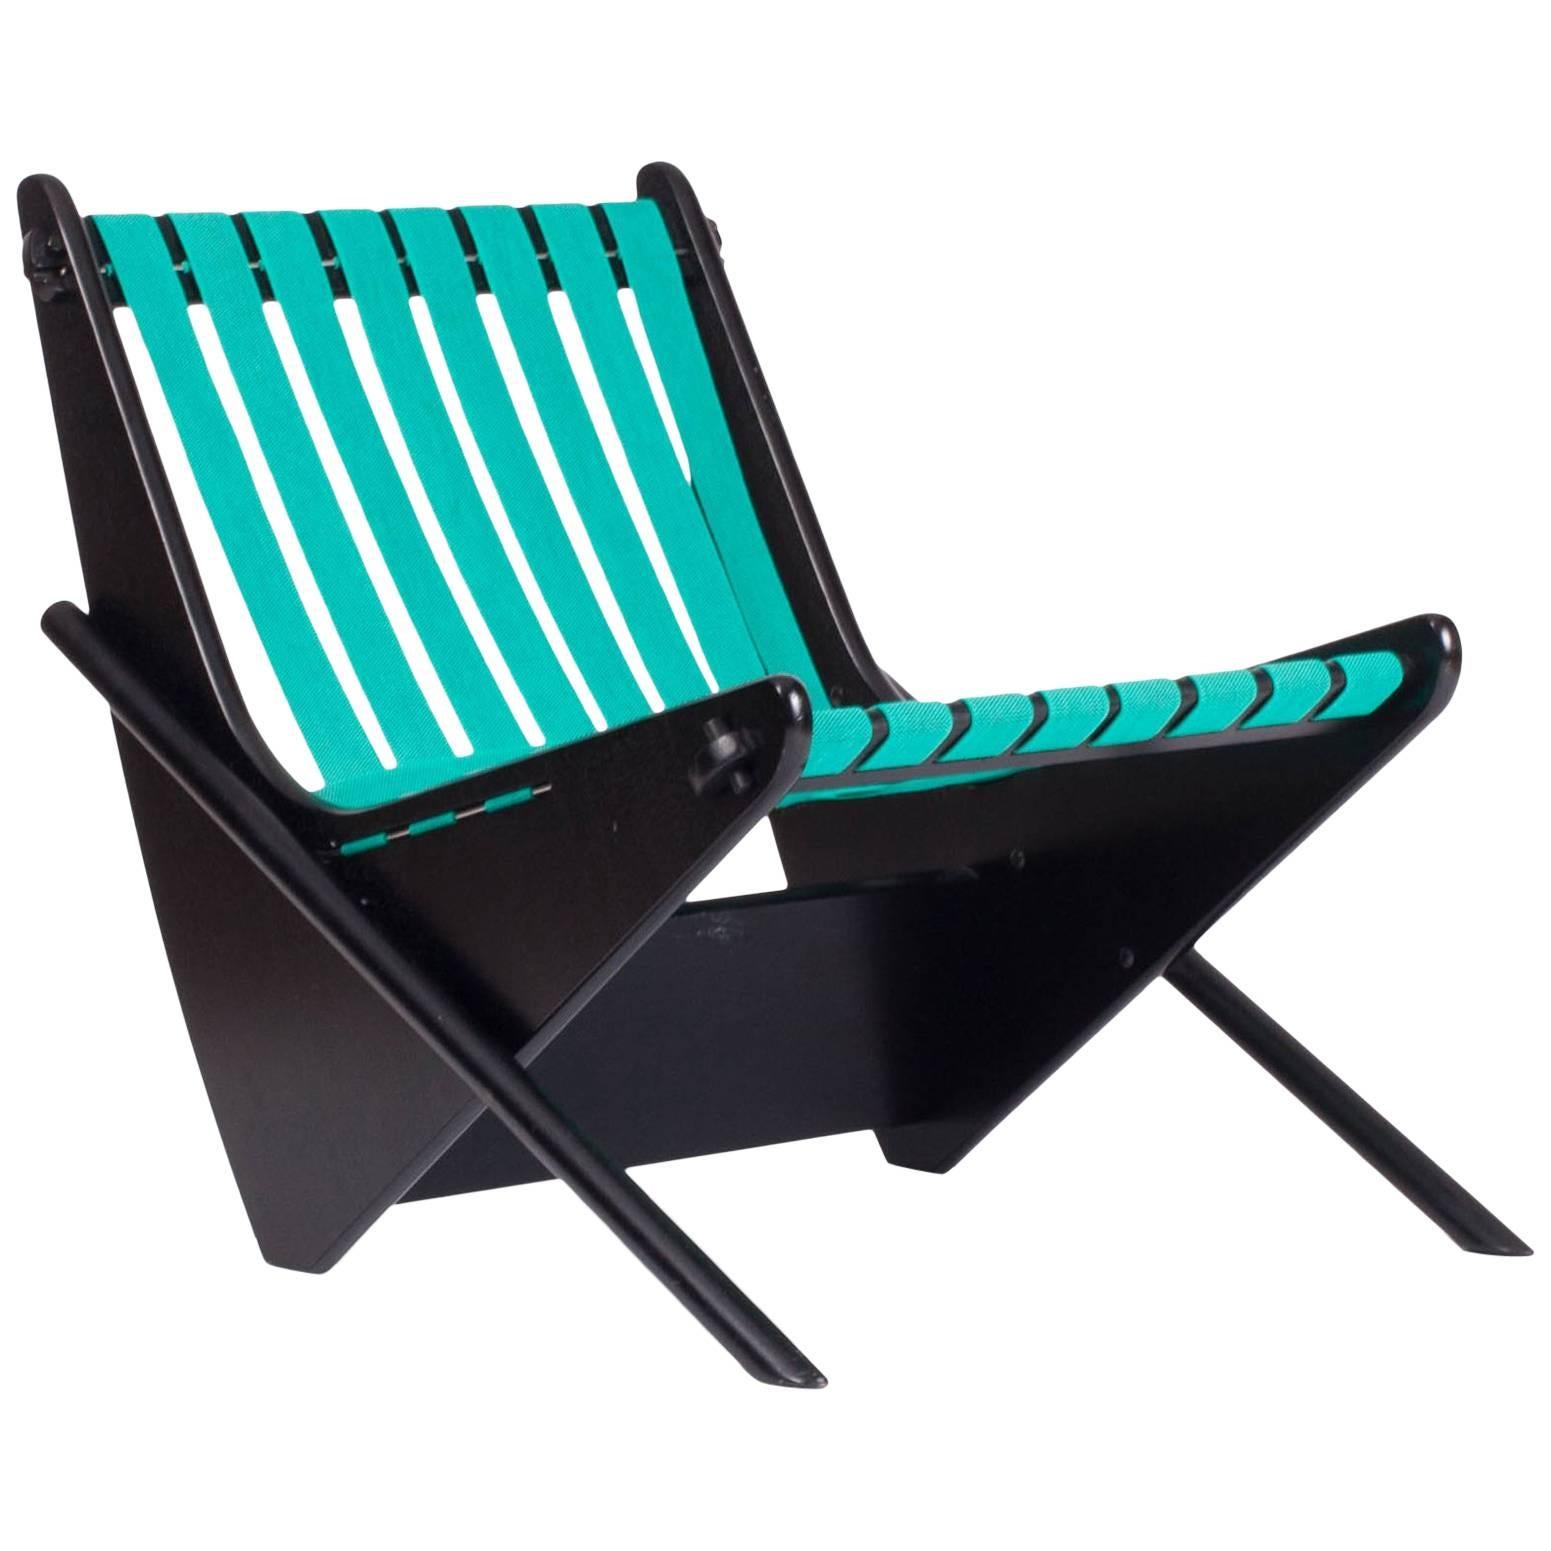 Brazilian design  “Boomerang” Lounge Chair by Richard Neutra